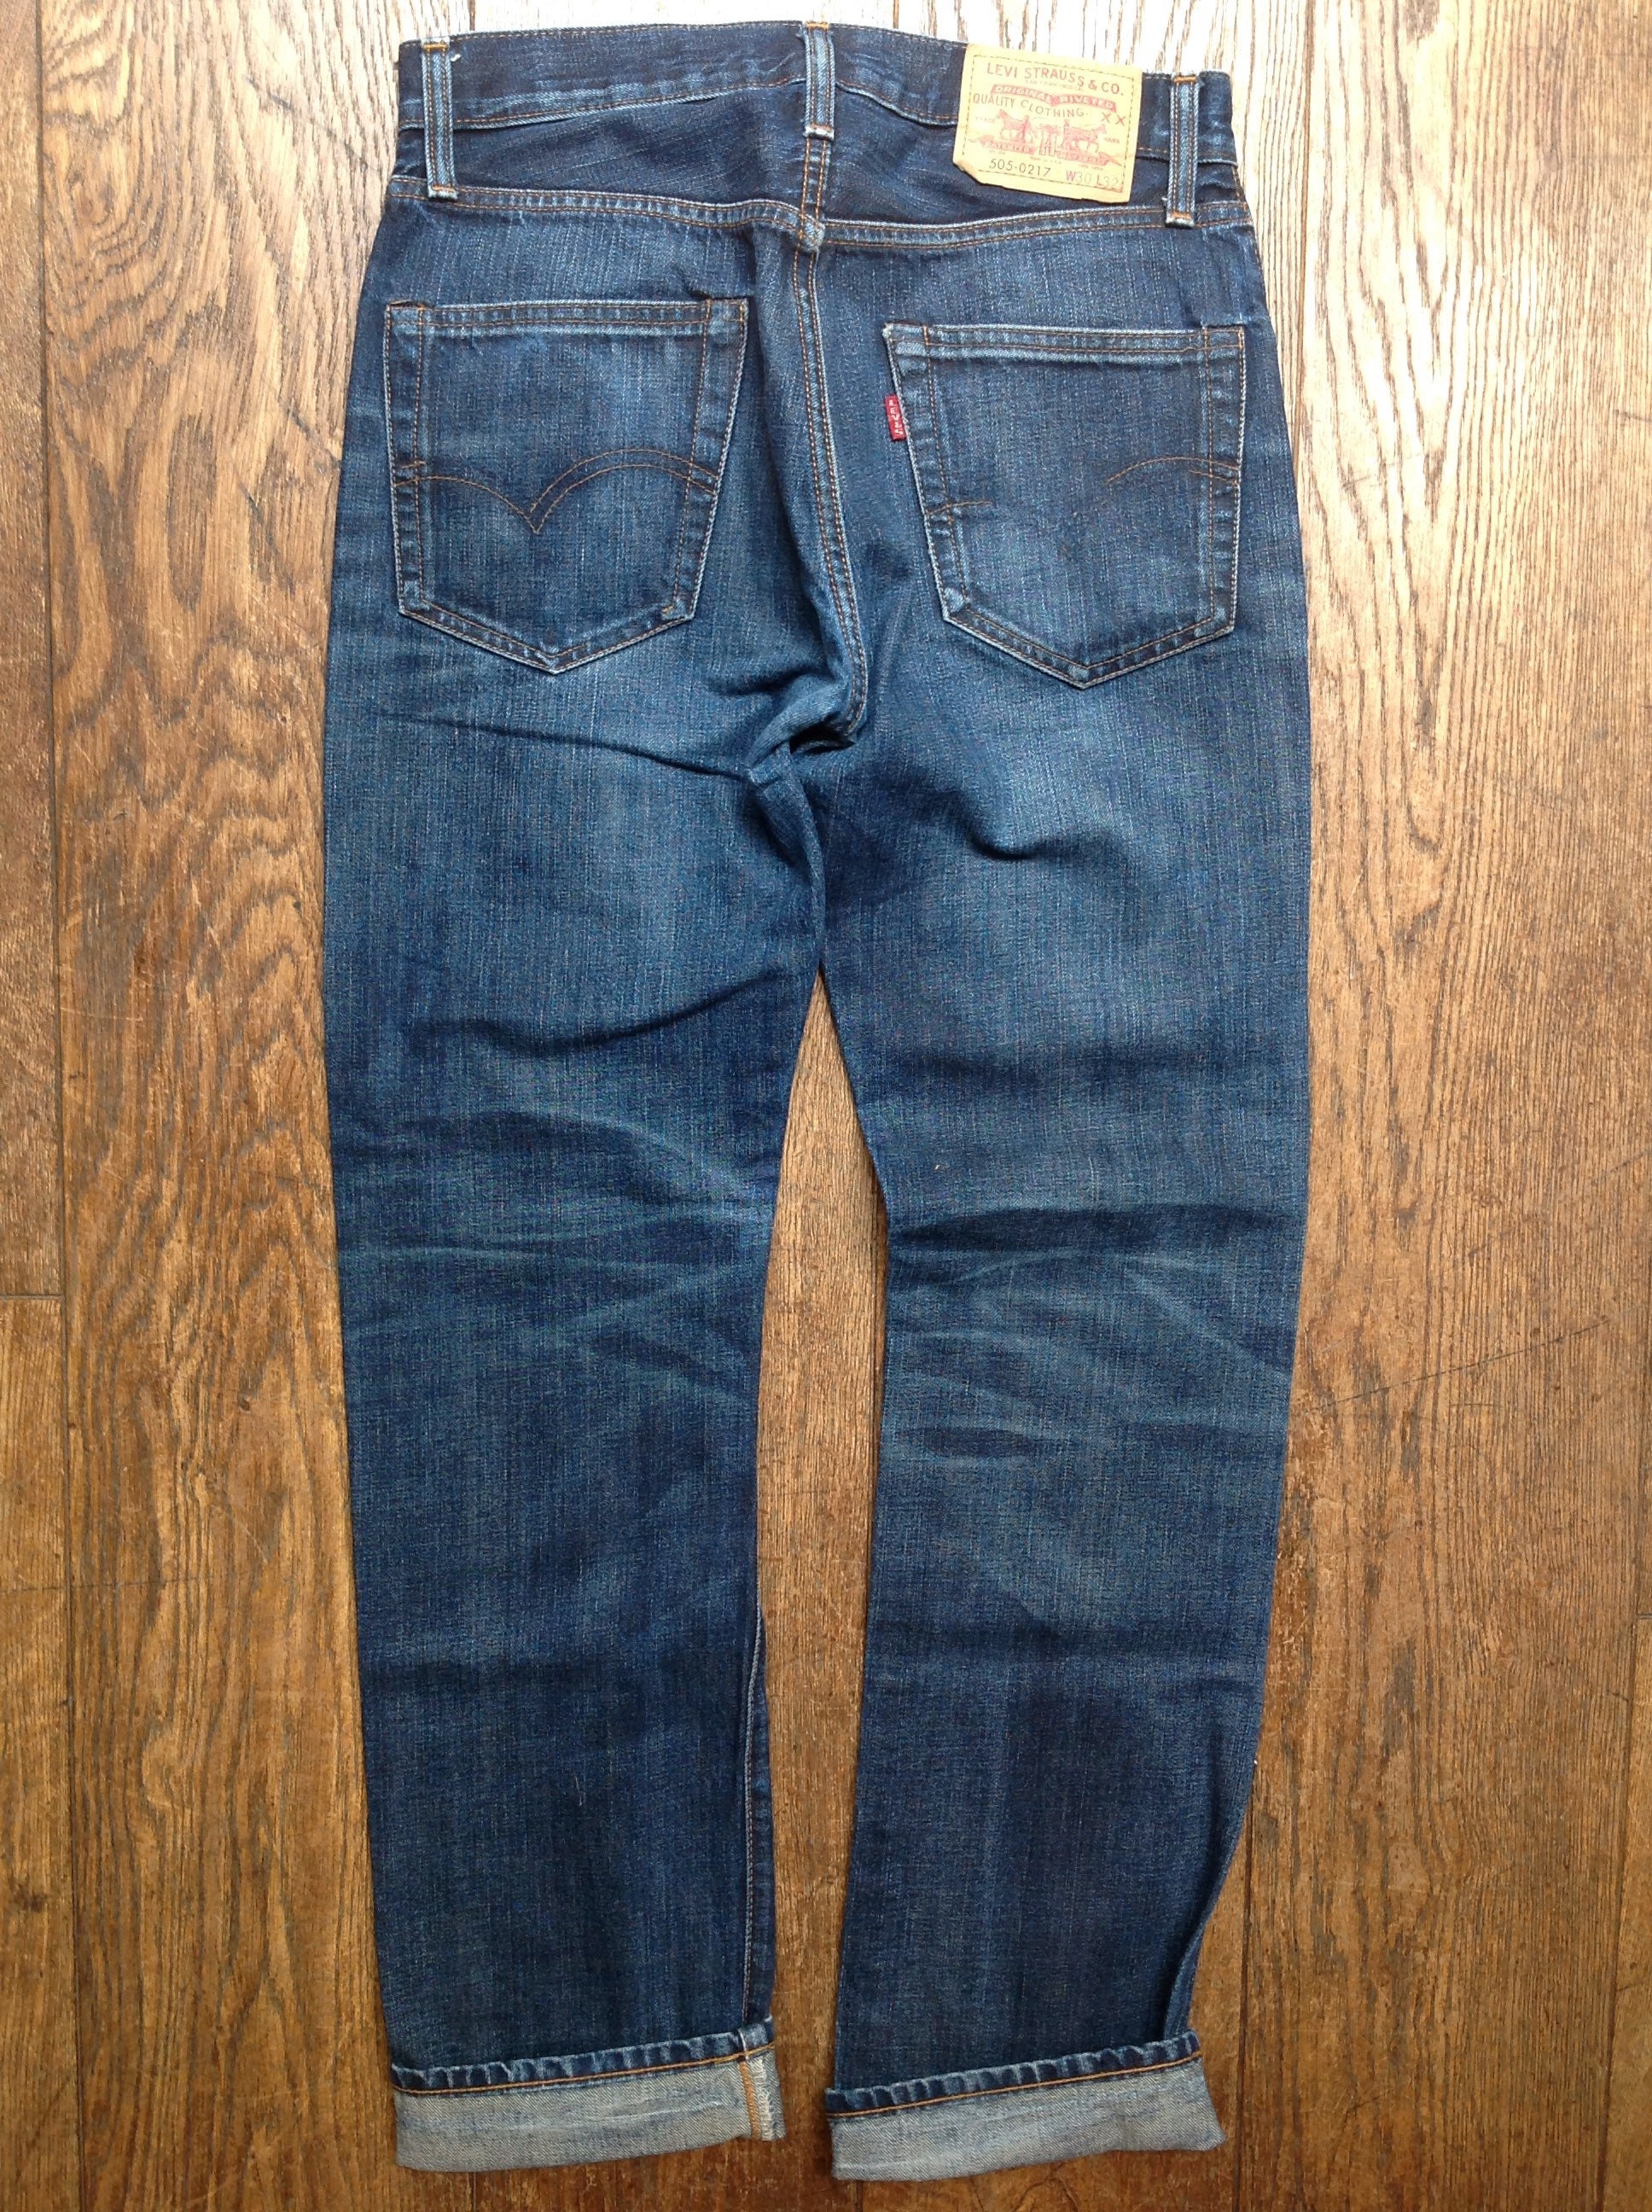 Vintage Levi Strauss Levis LVC selvedge denim jeans 505-0217 distressed  repaired darned workwear work chore 34” x 32” Talon zipper